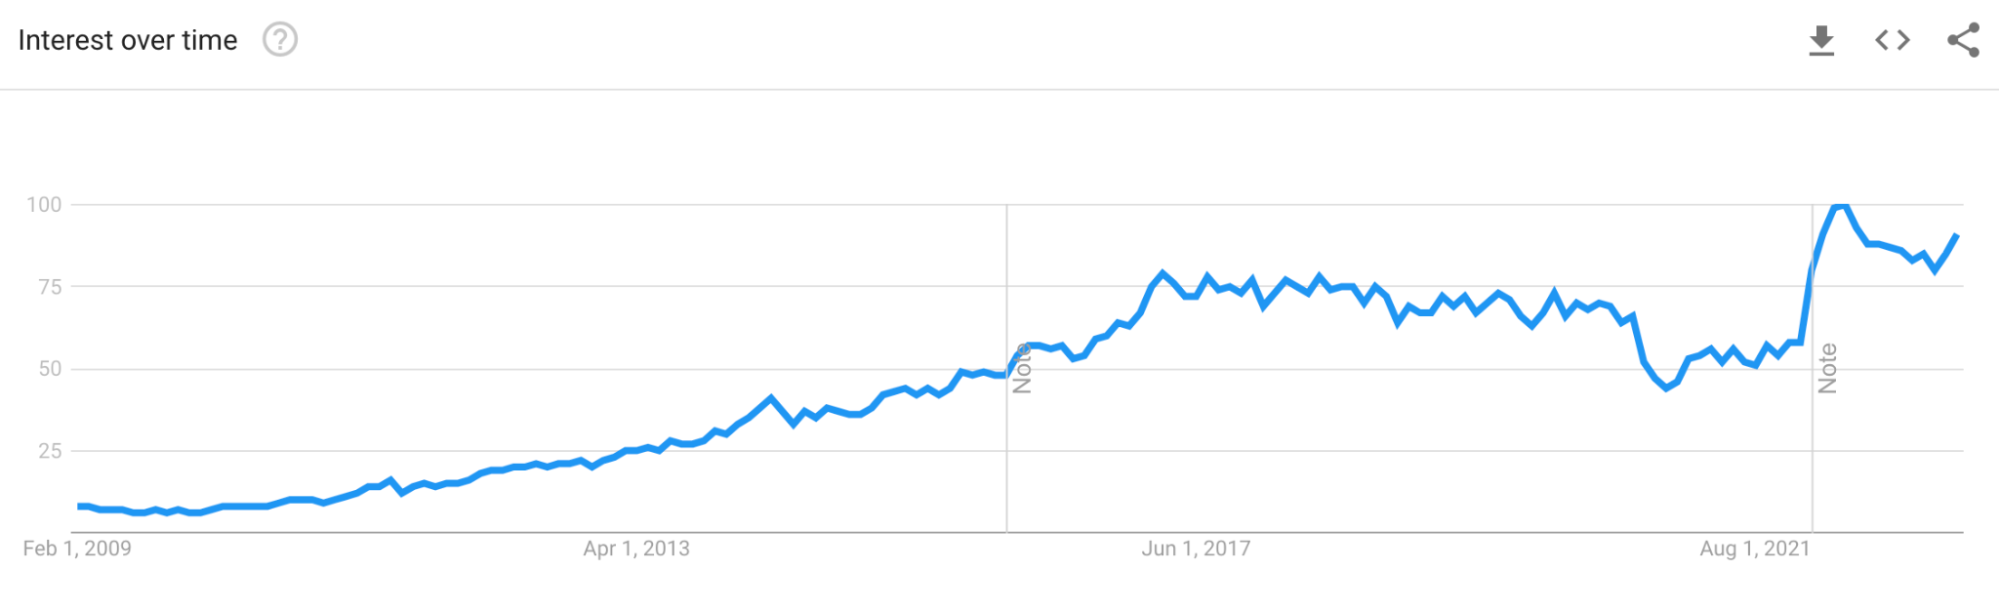 Interest in Node on Google over time